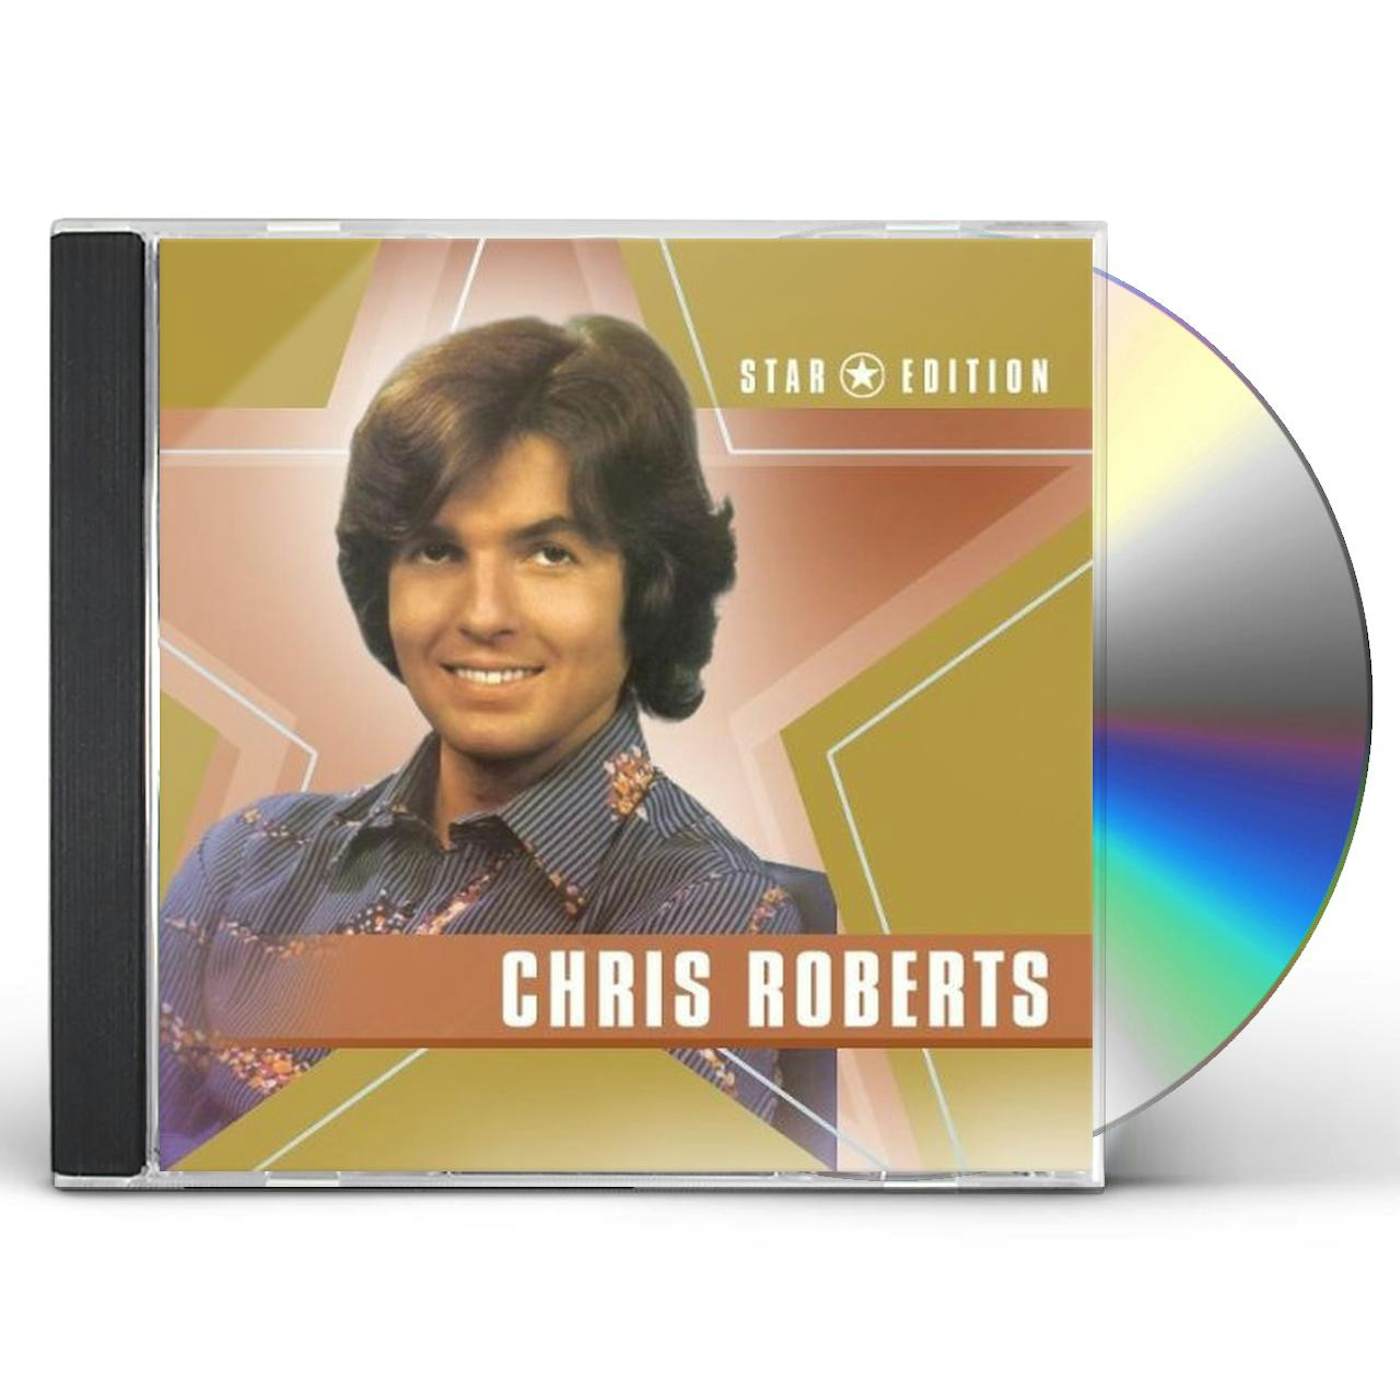 Chris Roberts STAR EDITION CD